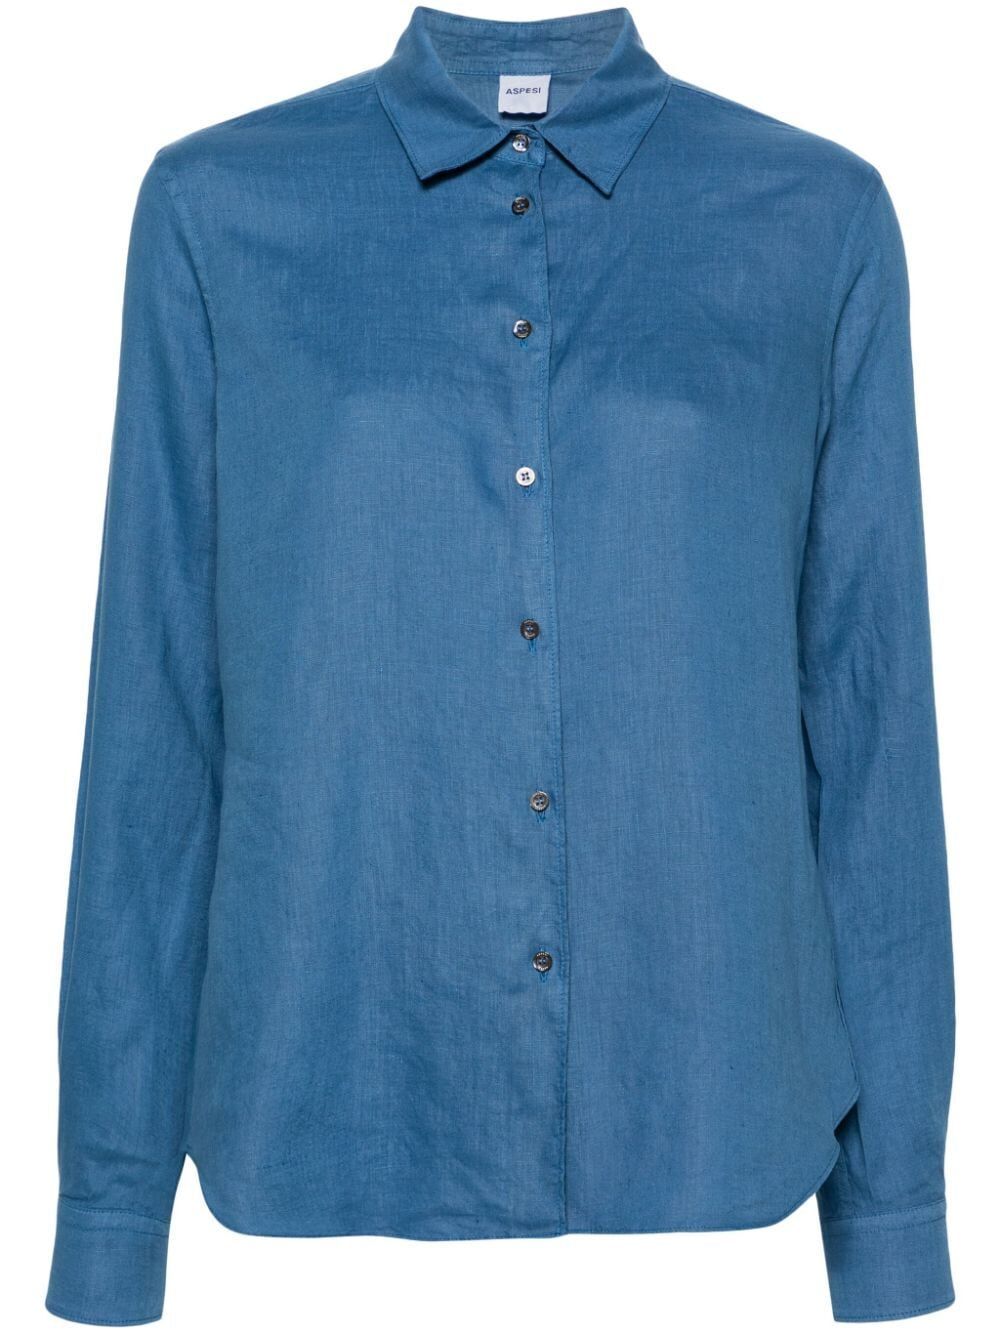 Aspesi Mod 5422 Shirt In Blue